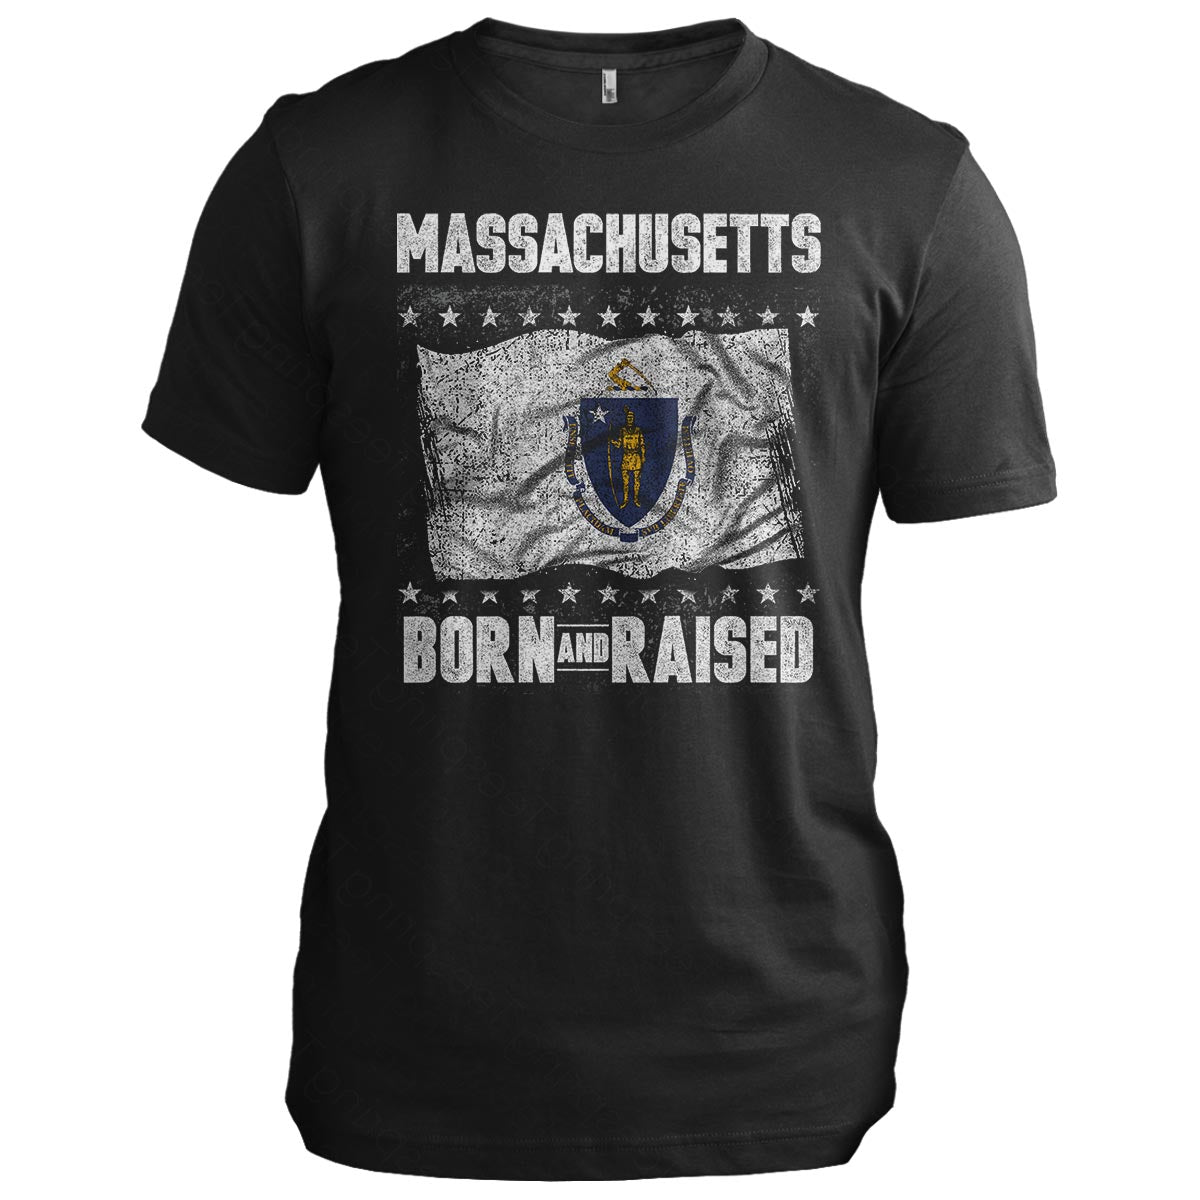 Massachusetts: Born and Raised